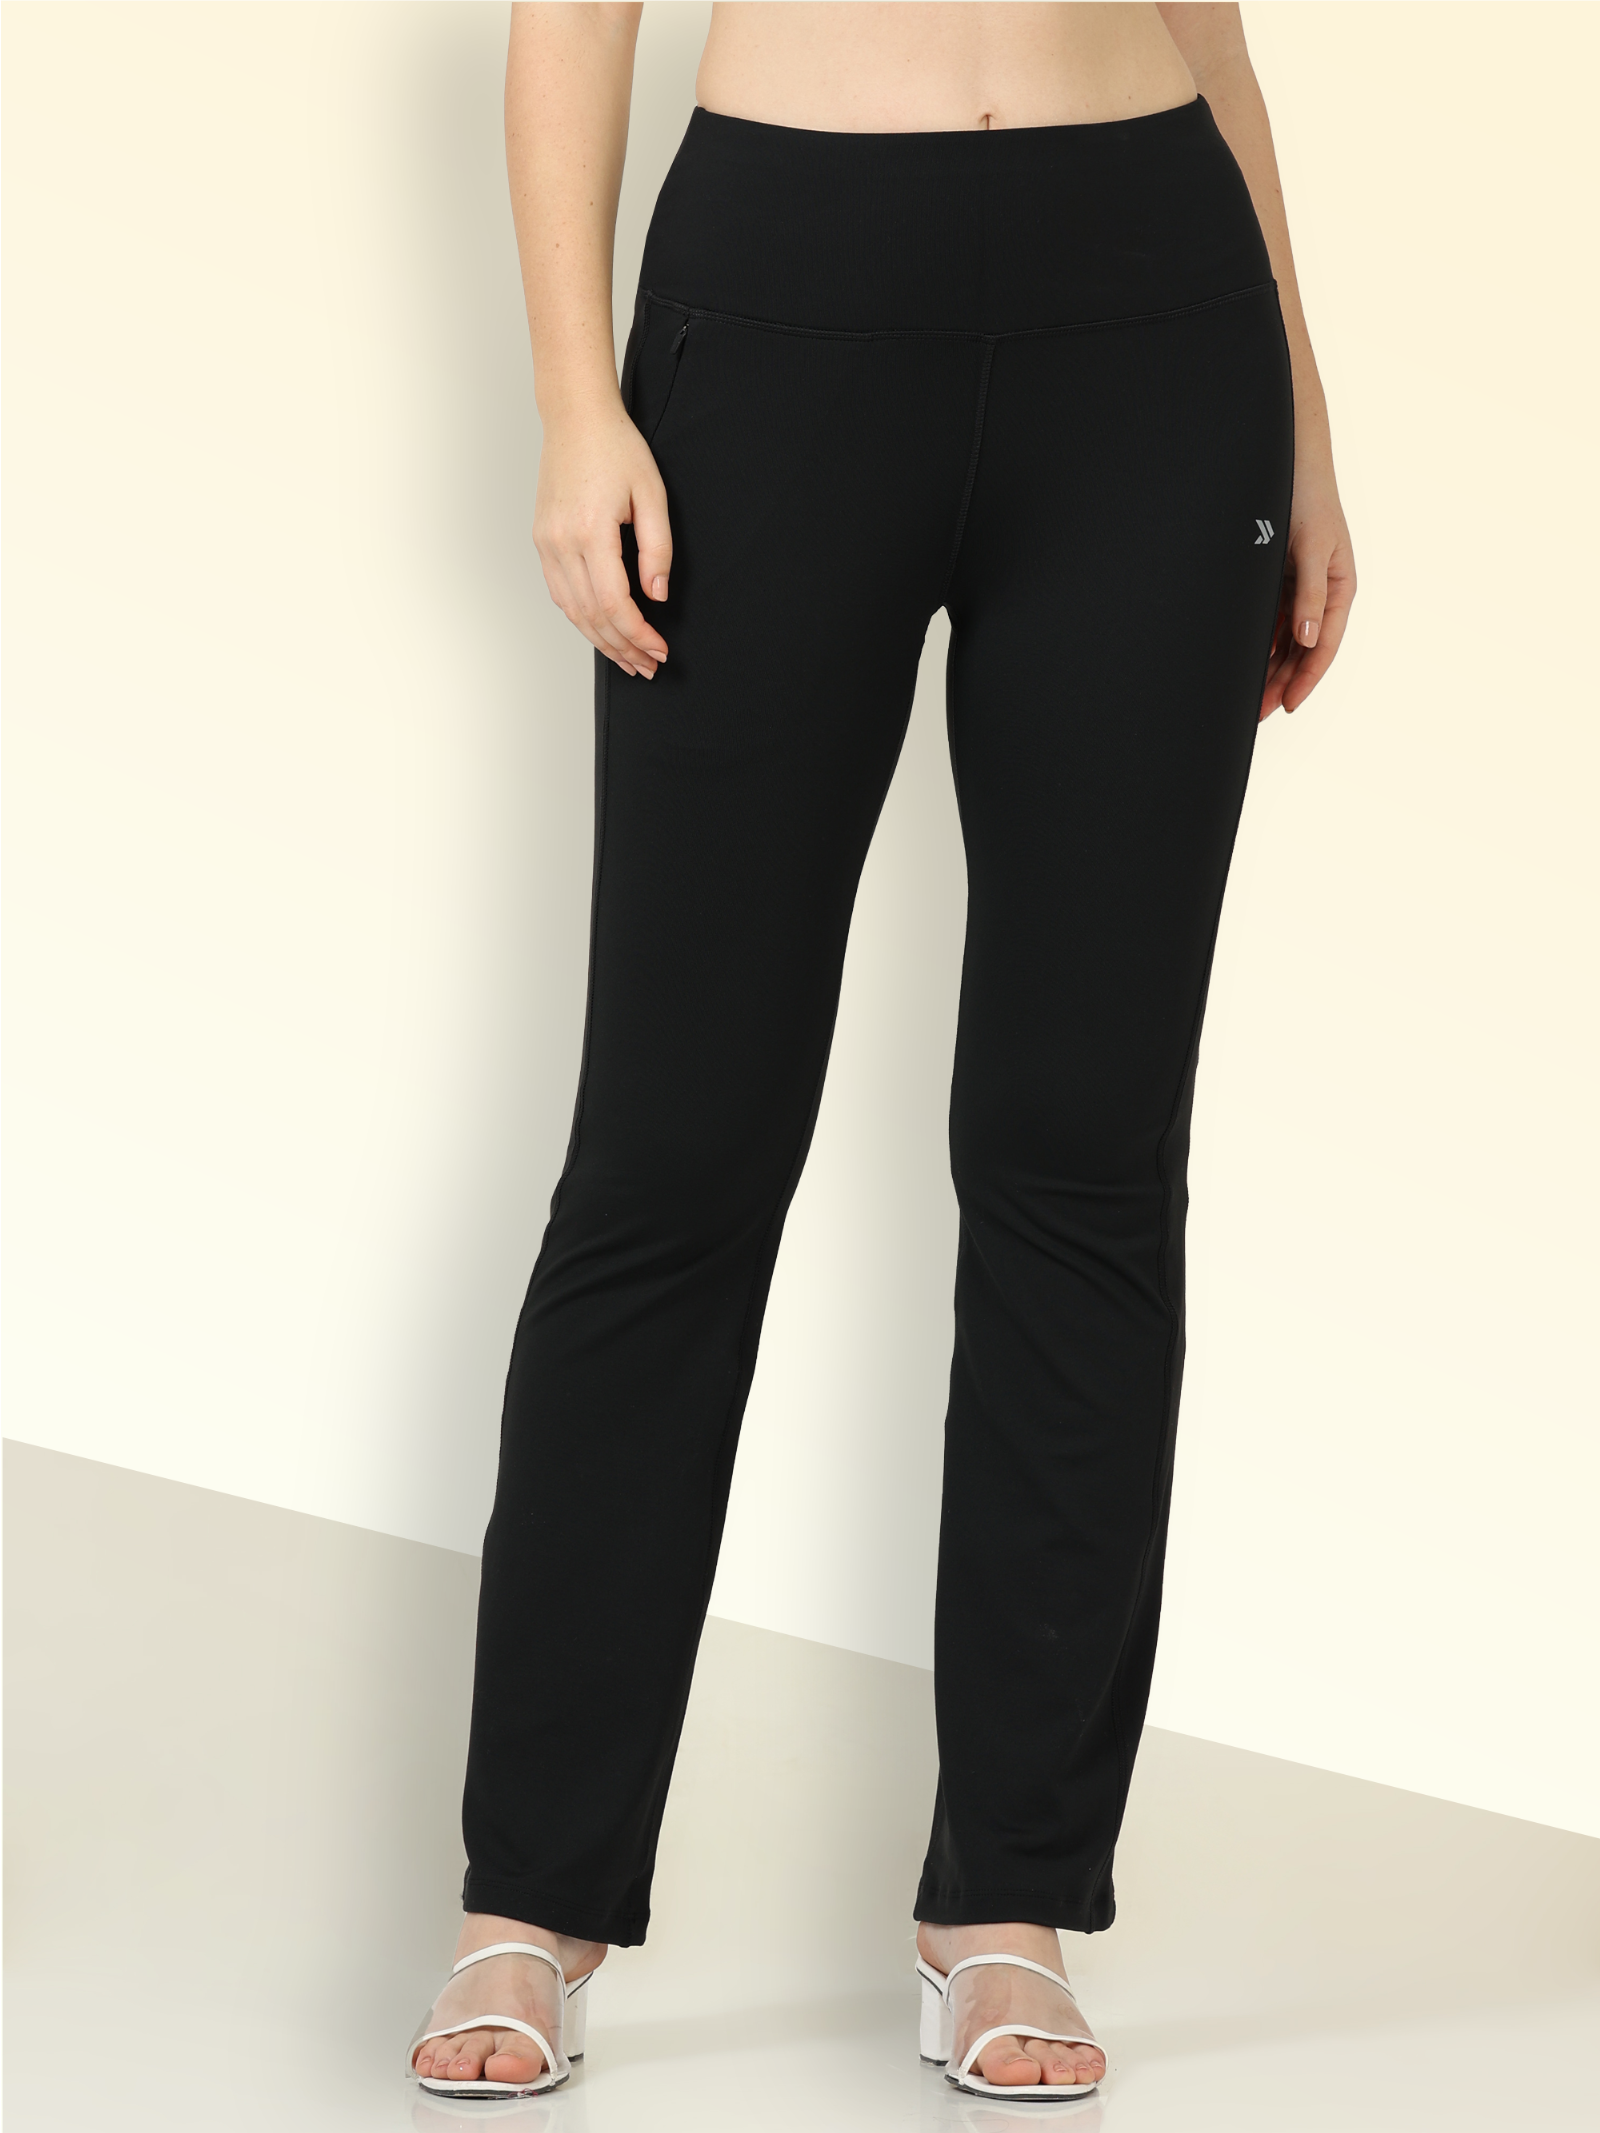 FashionSierra - Women's Stretchy Flare Pants  Black flare pants, Women  jogger pants, Fashion pants